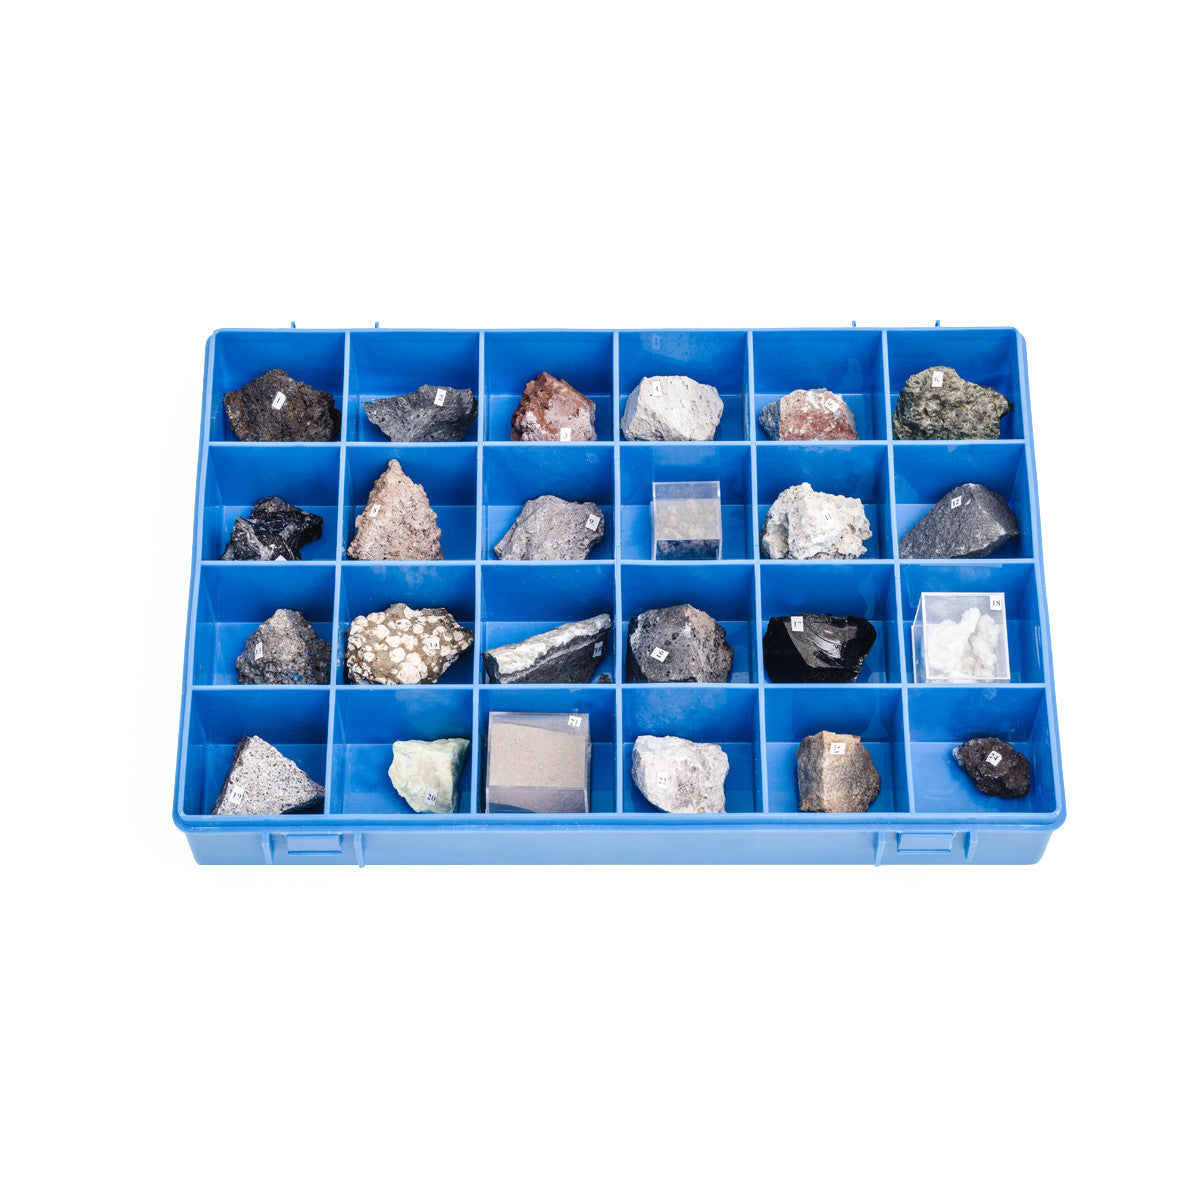 U72015 Collection of 24 rocks